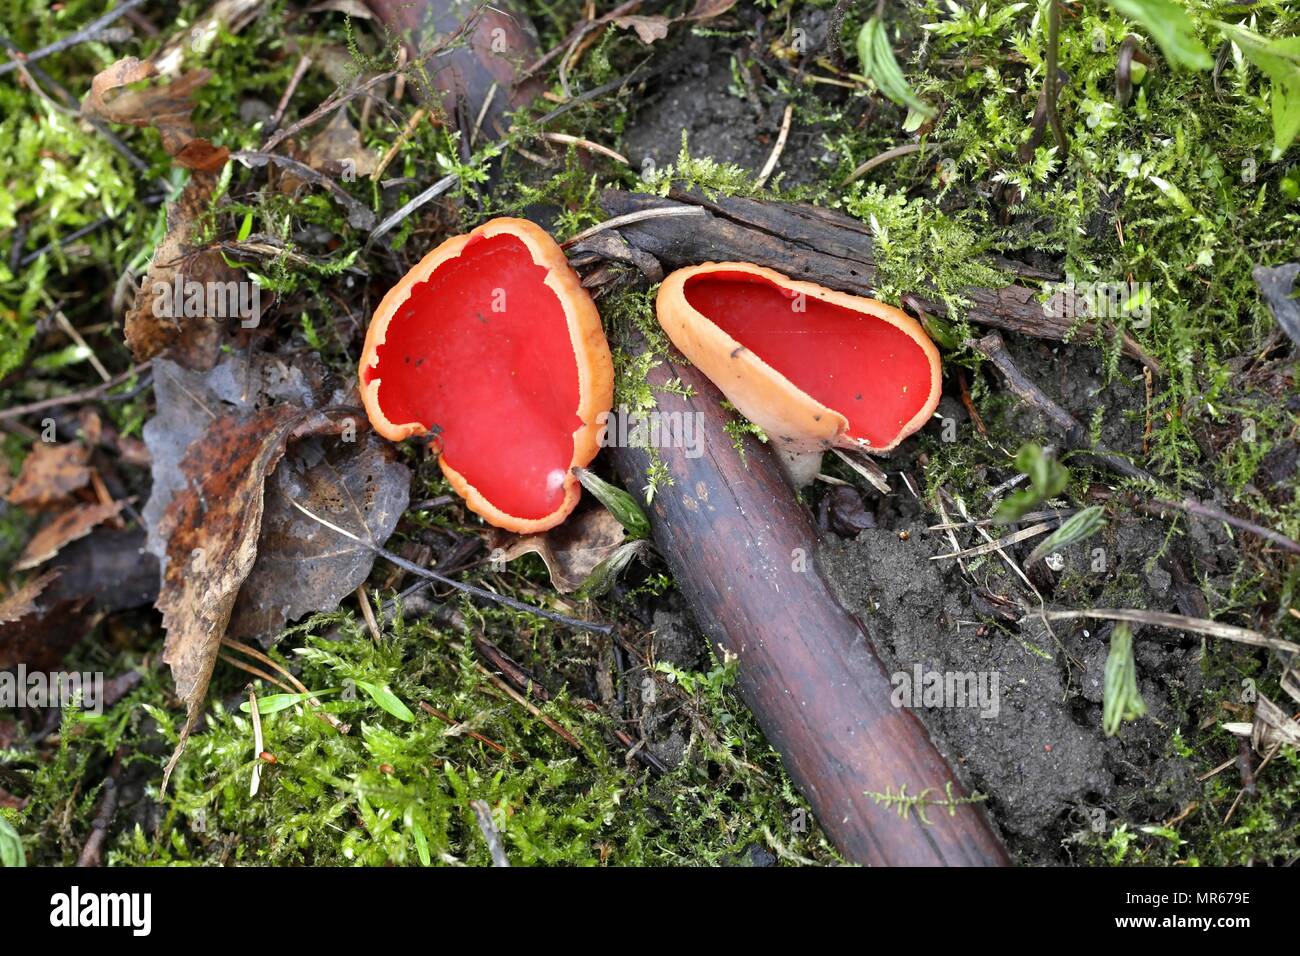 Scarlet elfcup, Sarcoscypha austriaca, wild mushroom from Finland Stock Photo